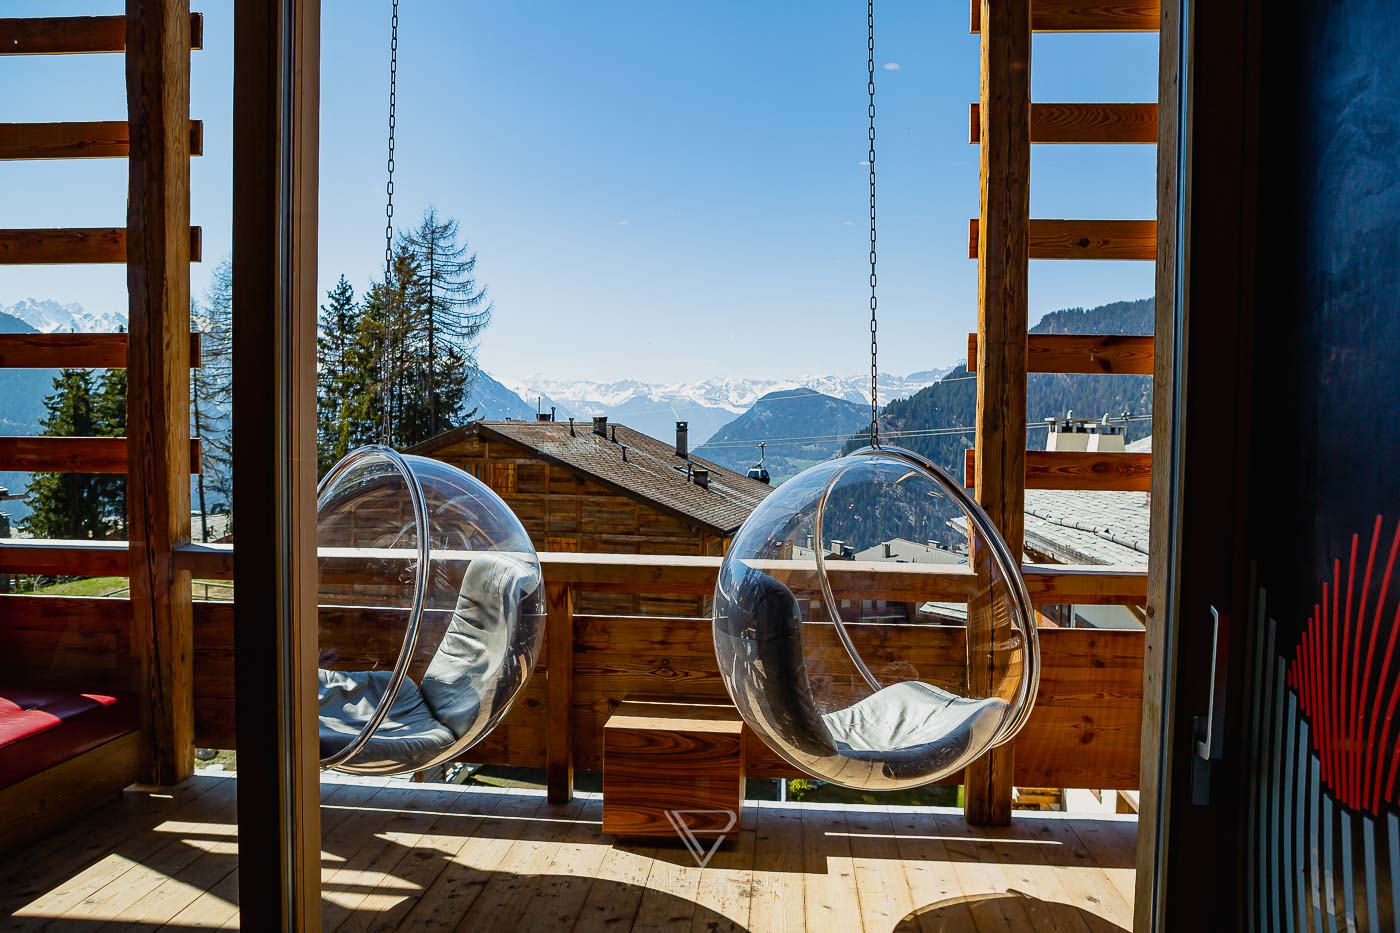 W Hotel Verbier Switzerland - luxury ski hotel in the Swiss mountains in Switzerland - Winter in Verbier